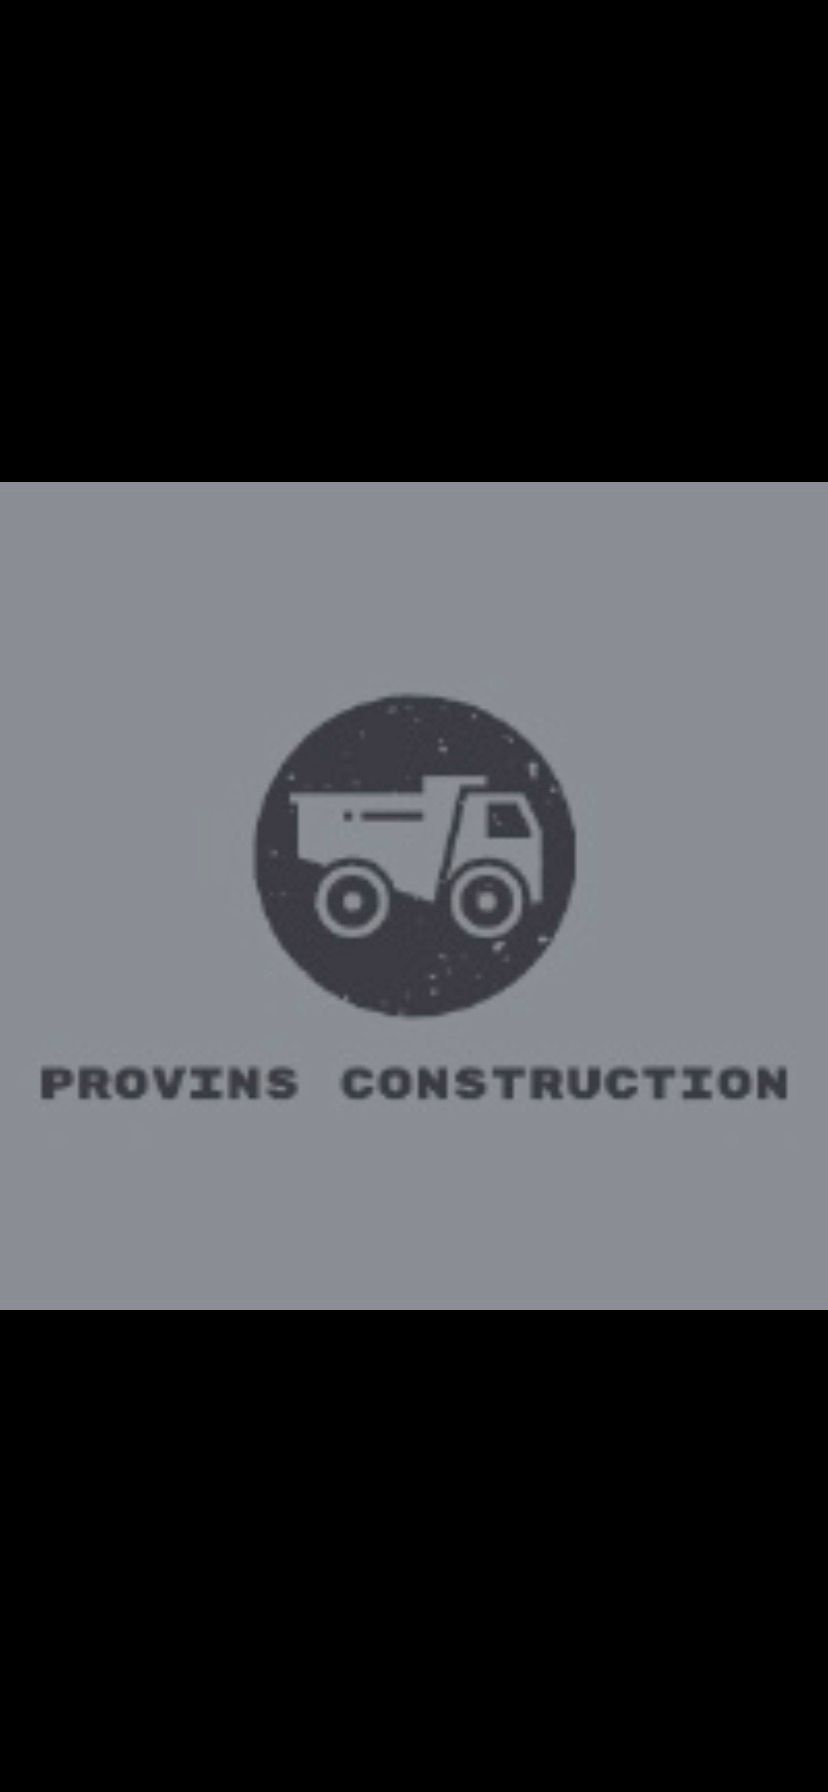 Provins Construction